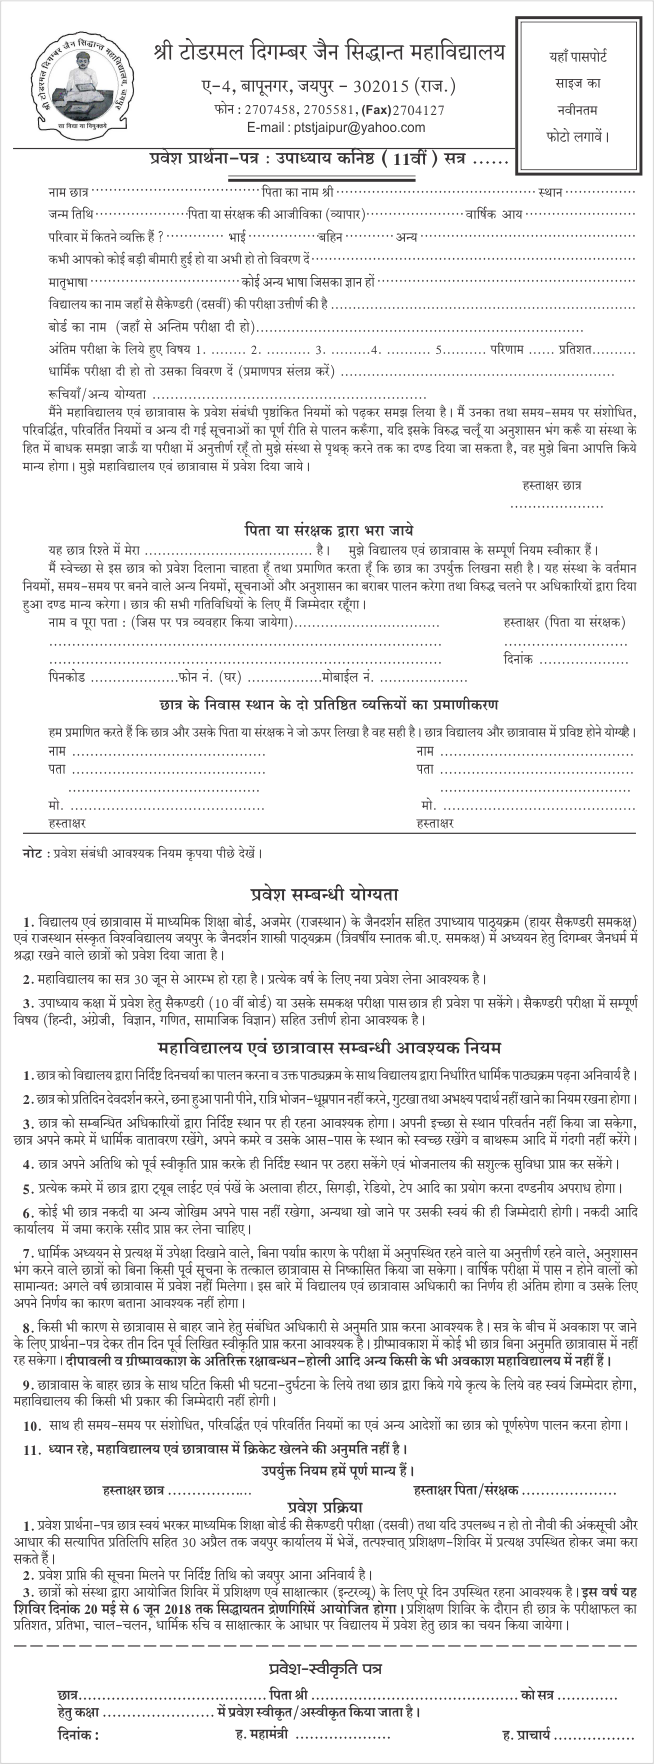 sidhant-mahavidyalaya-admission-form 